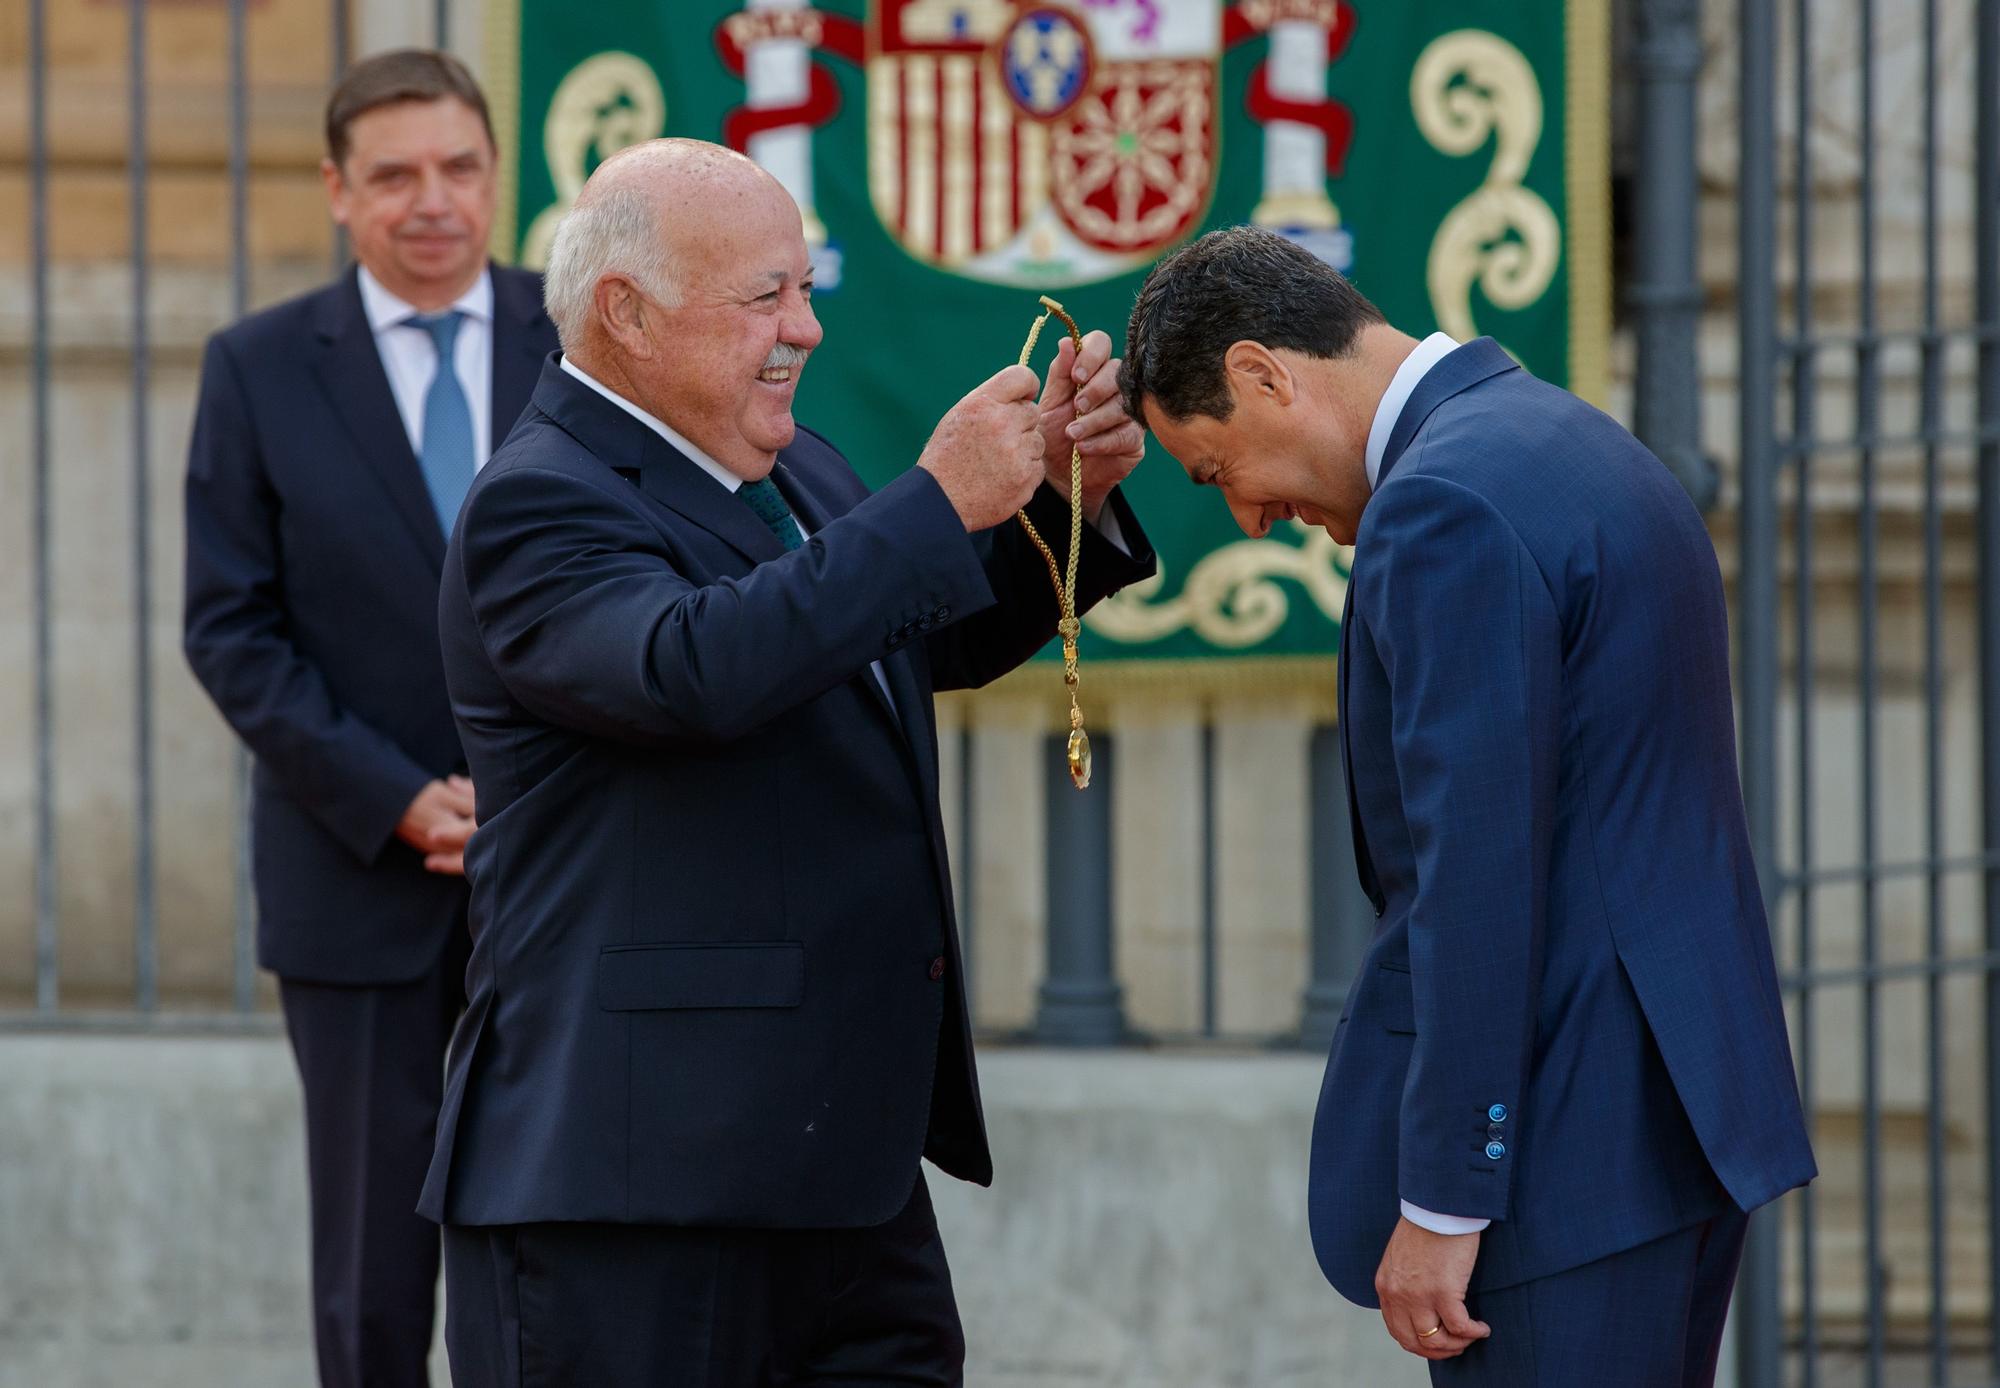 Toma de posesión de Juanma Moreno como Presidente de la Junta de Andalucía